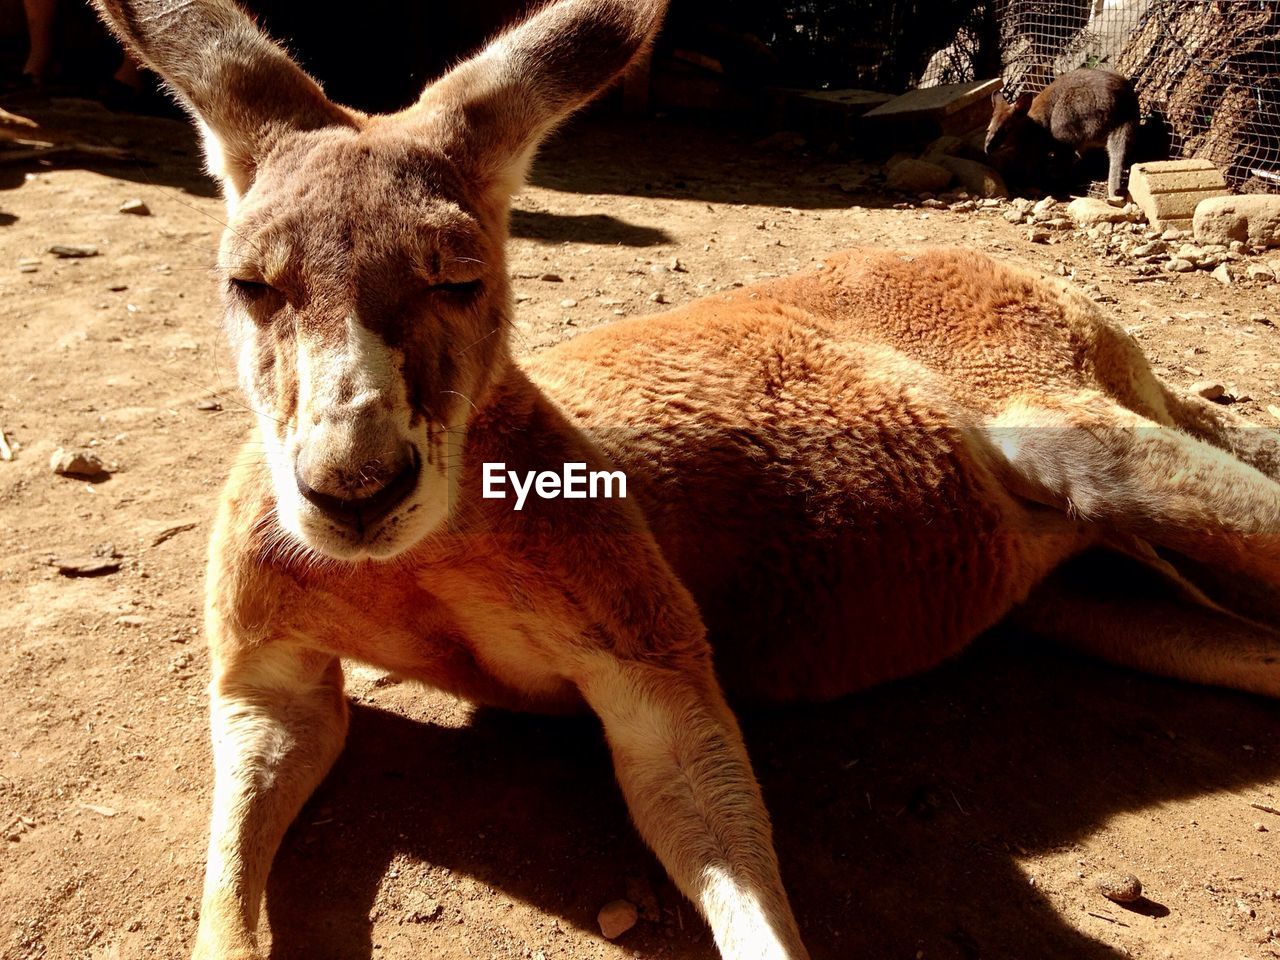 Close-up portrait of kangaroo relaxing outdoors